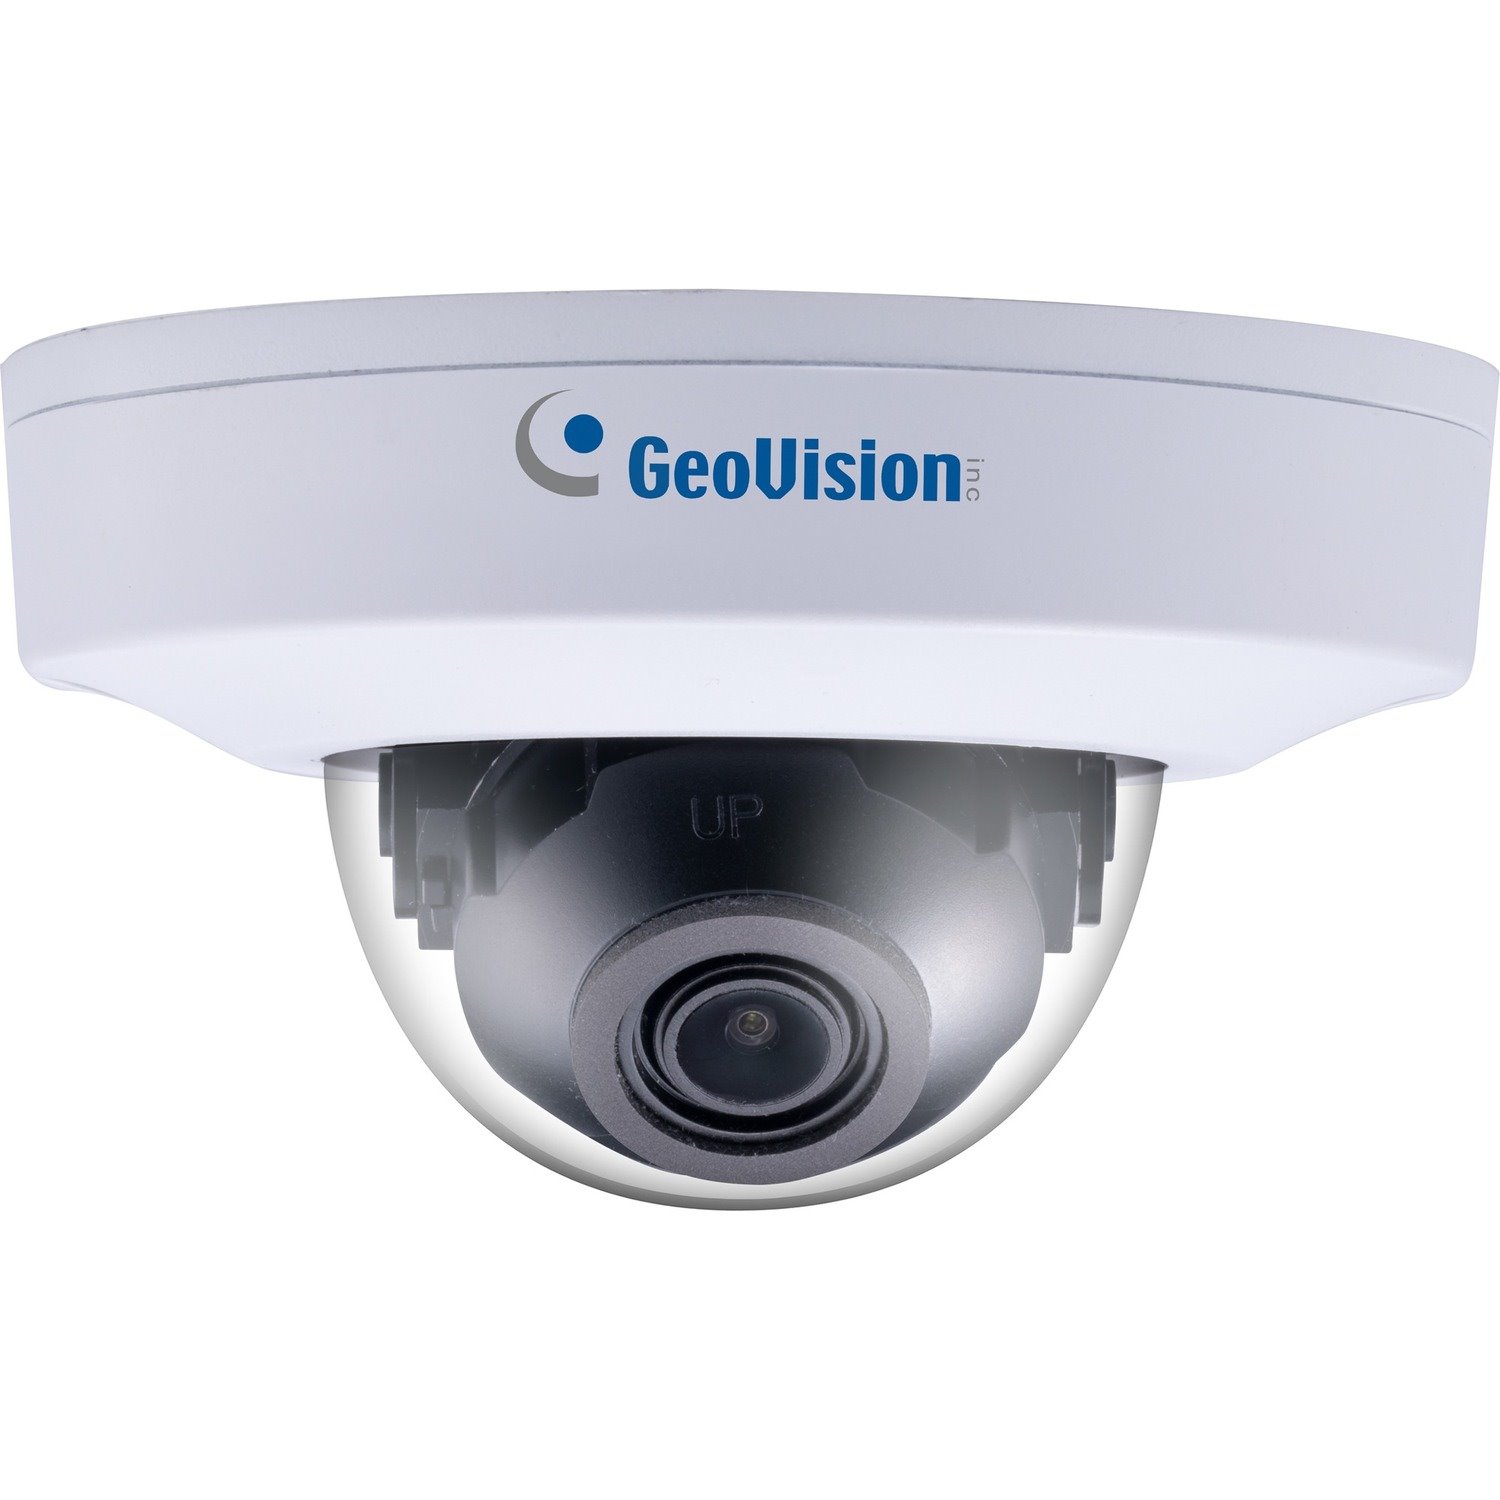 GeoVision GV-TFD4800 4 Megapixel Indoor Network Camera - Color - Dome